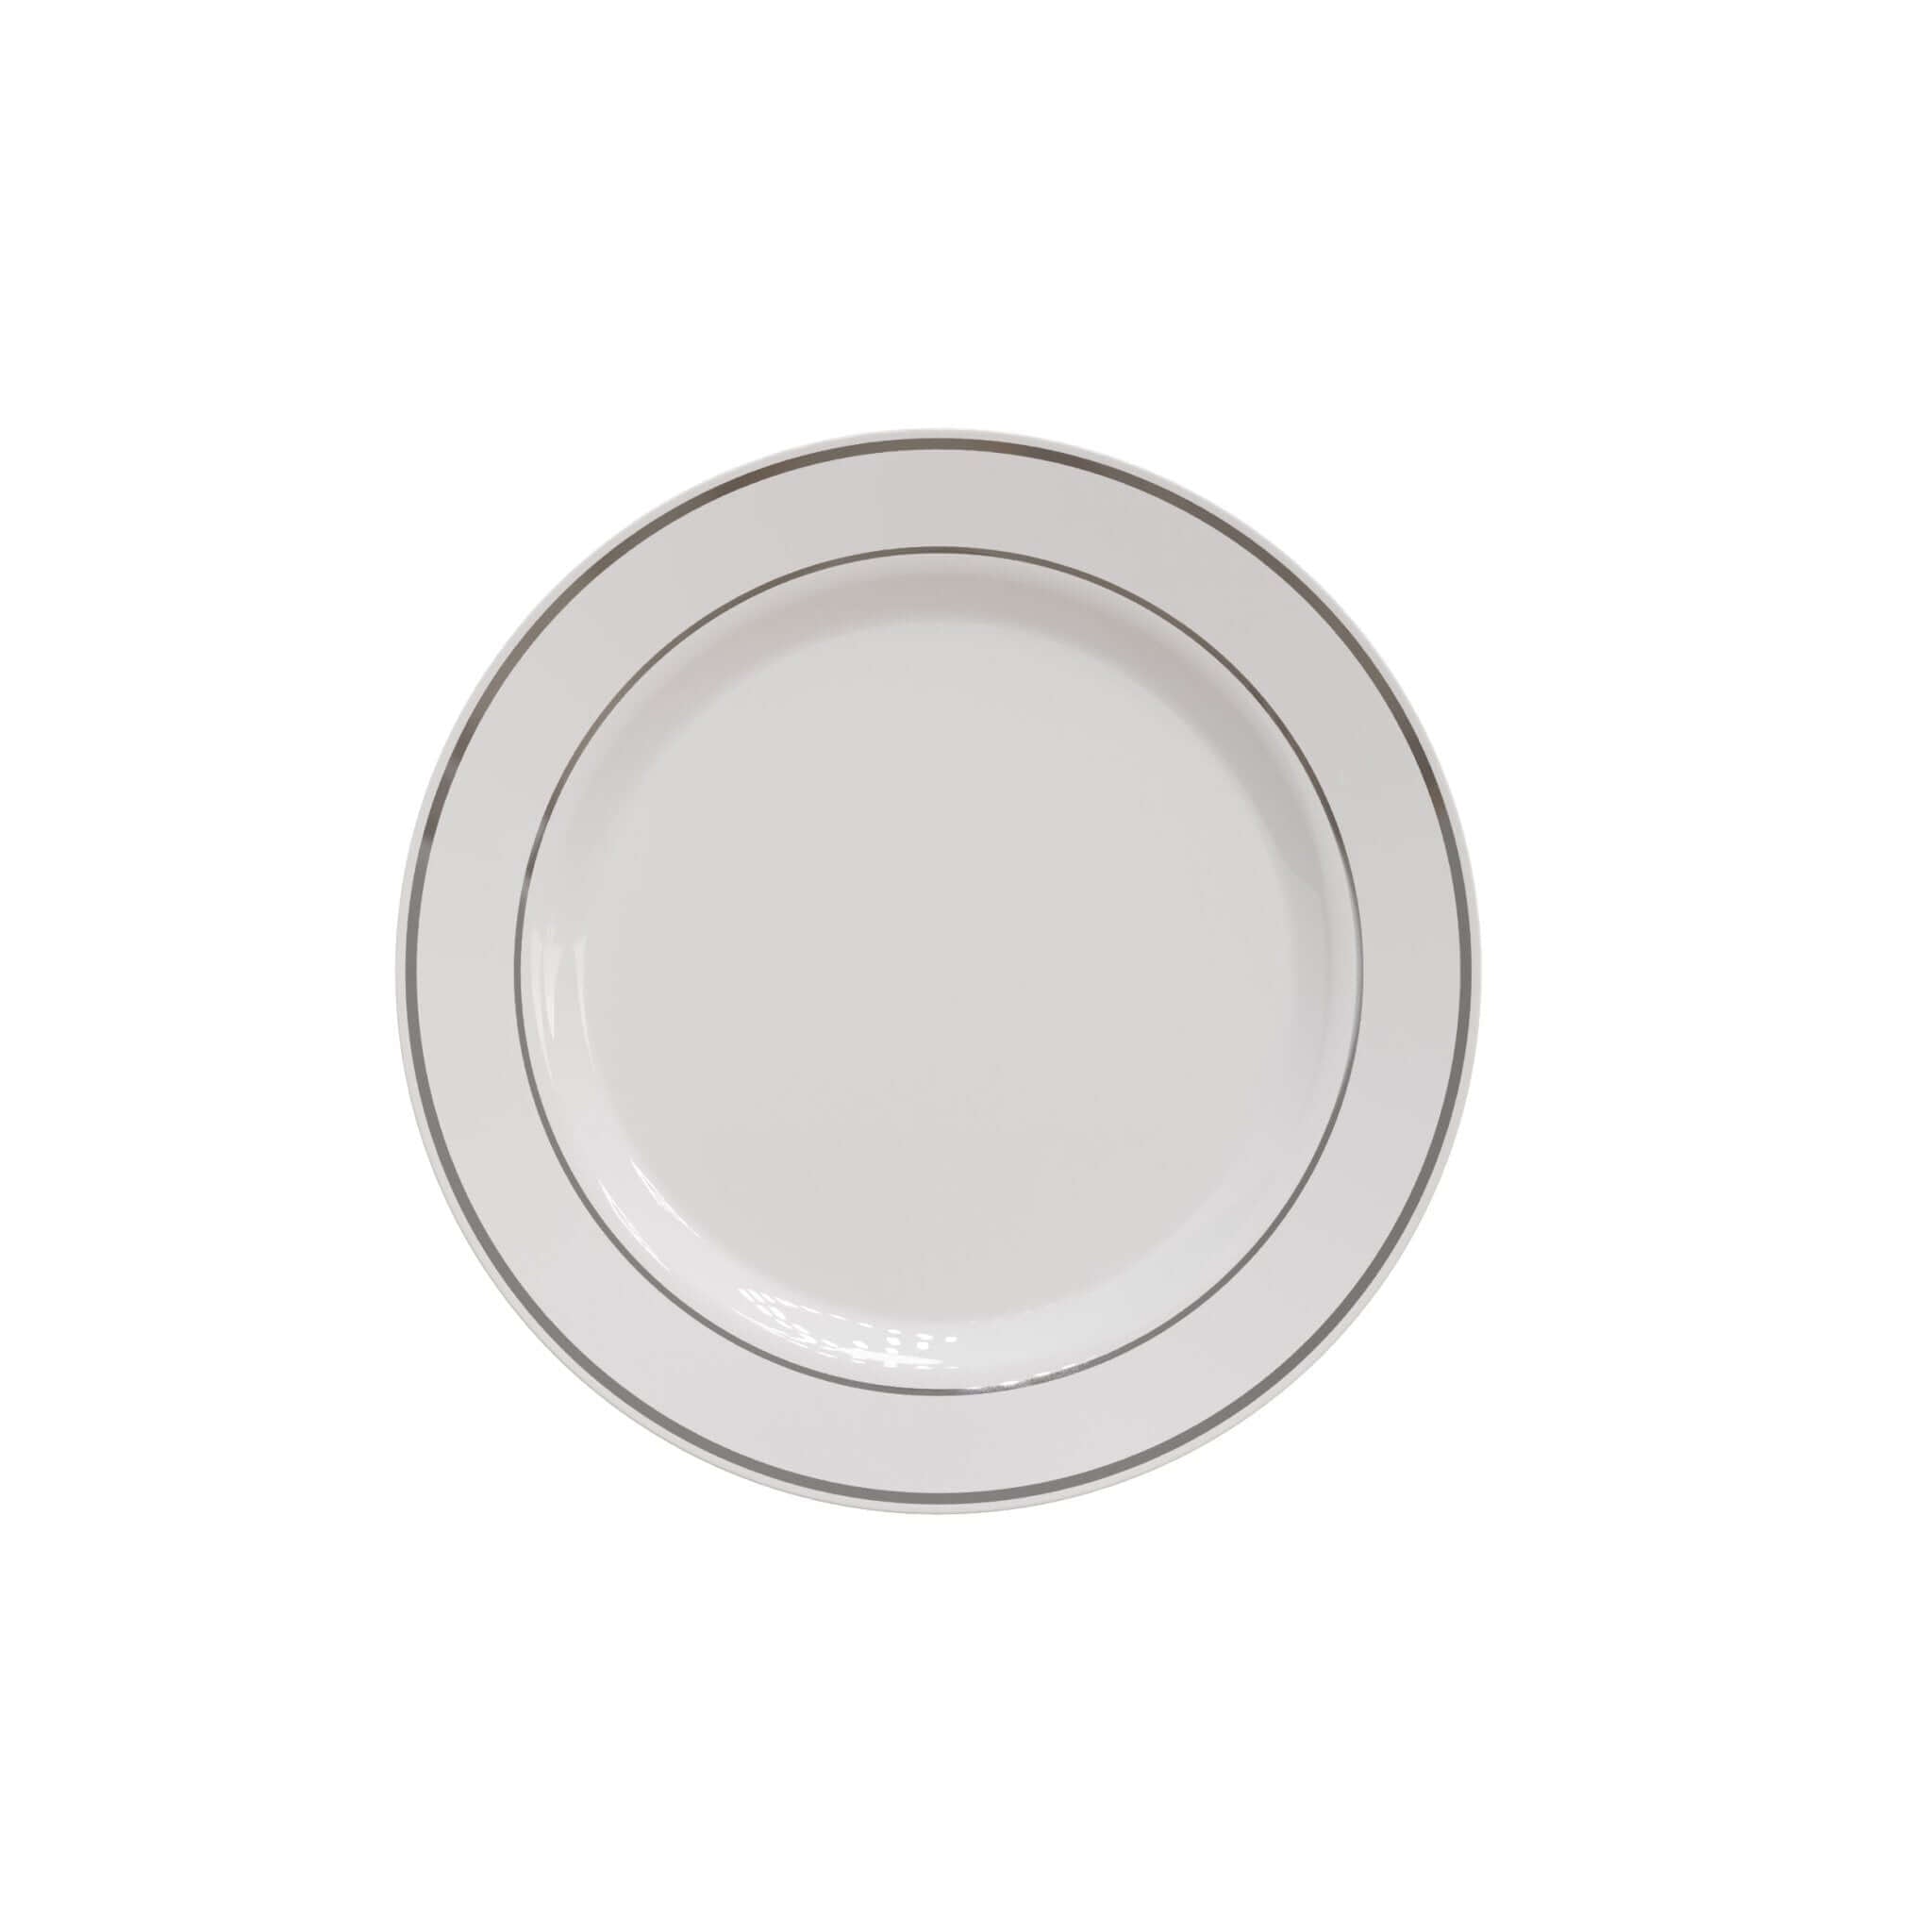 7.5" White/Silver Line Design Plastic Plates (120 Count) - Yom Tov Settings